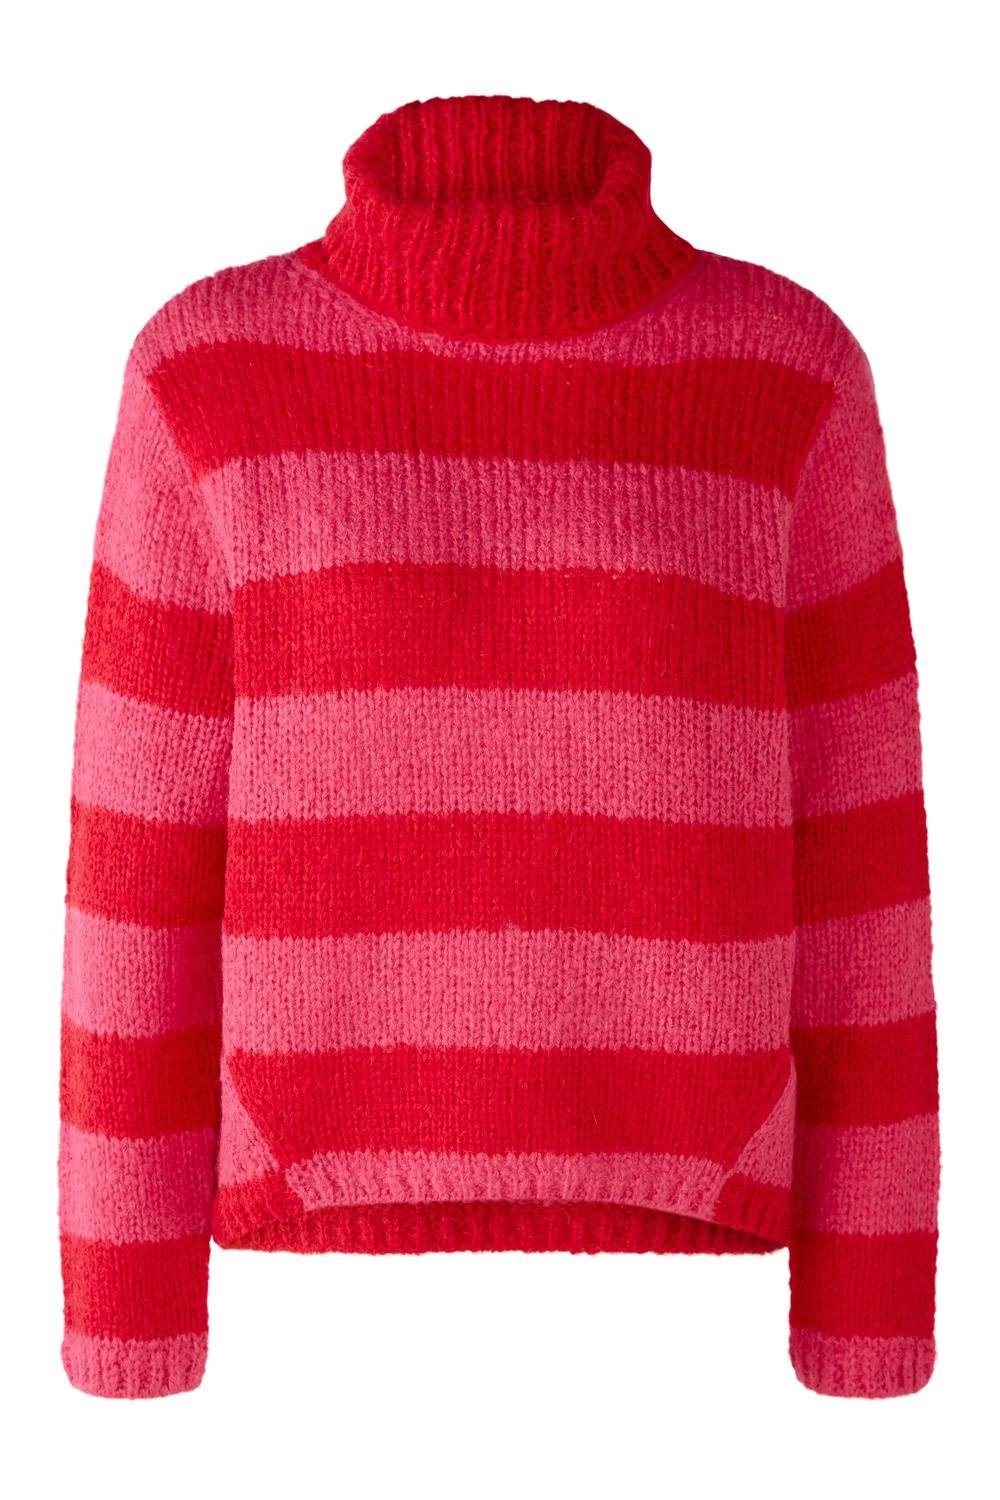 Oui Sweatshirt Pullover, red rose